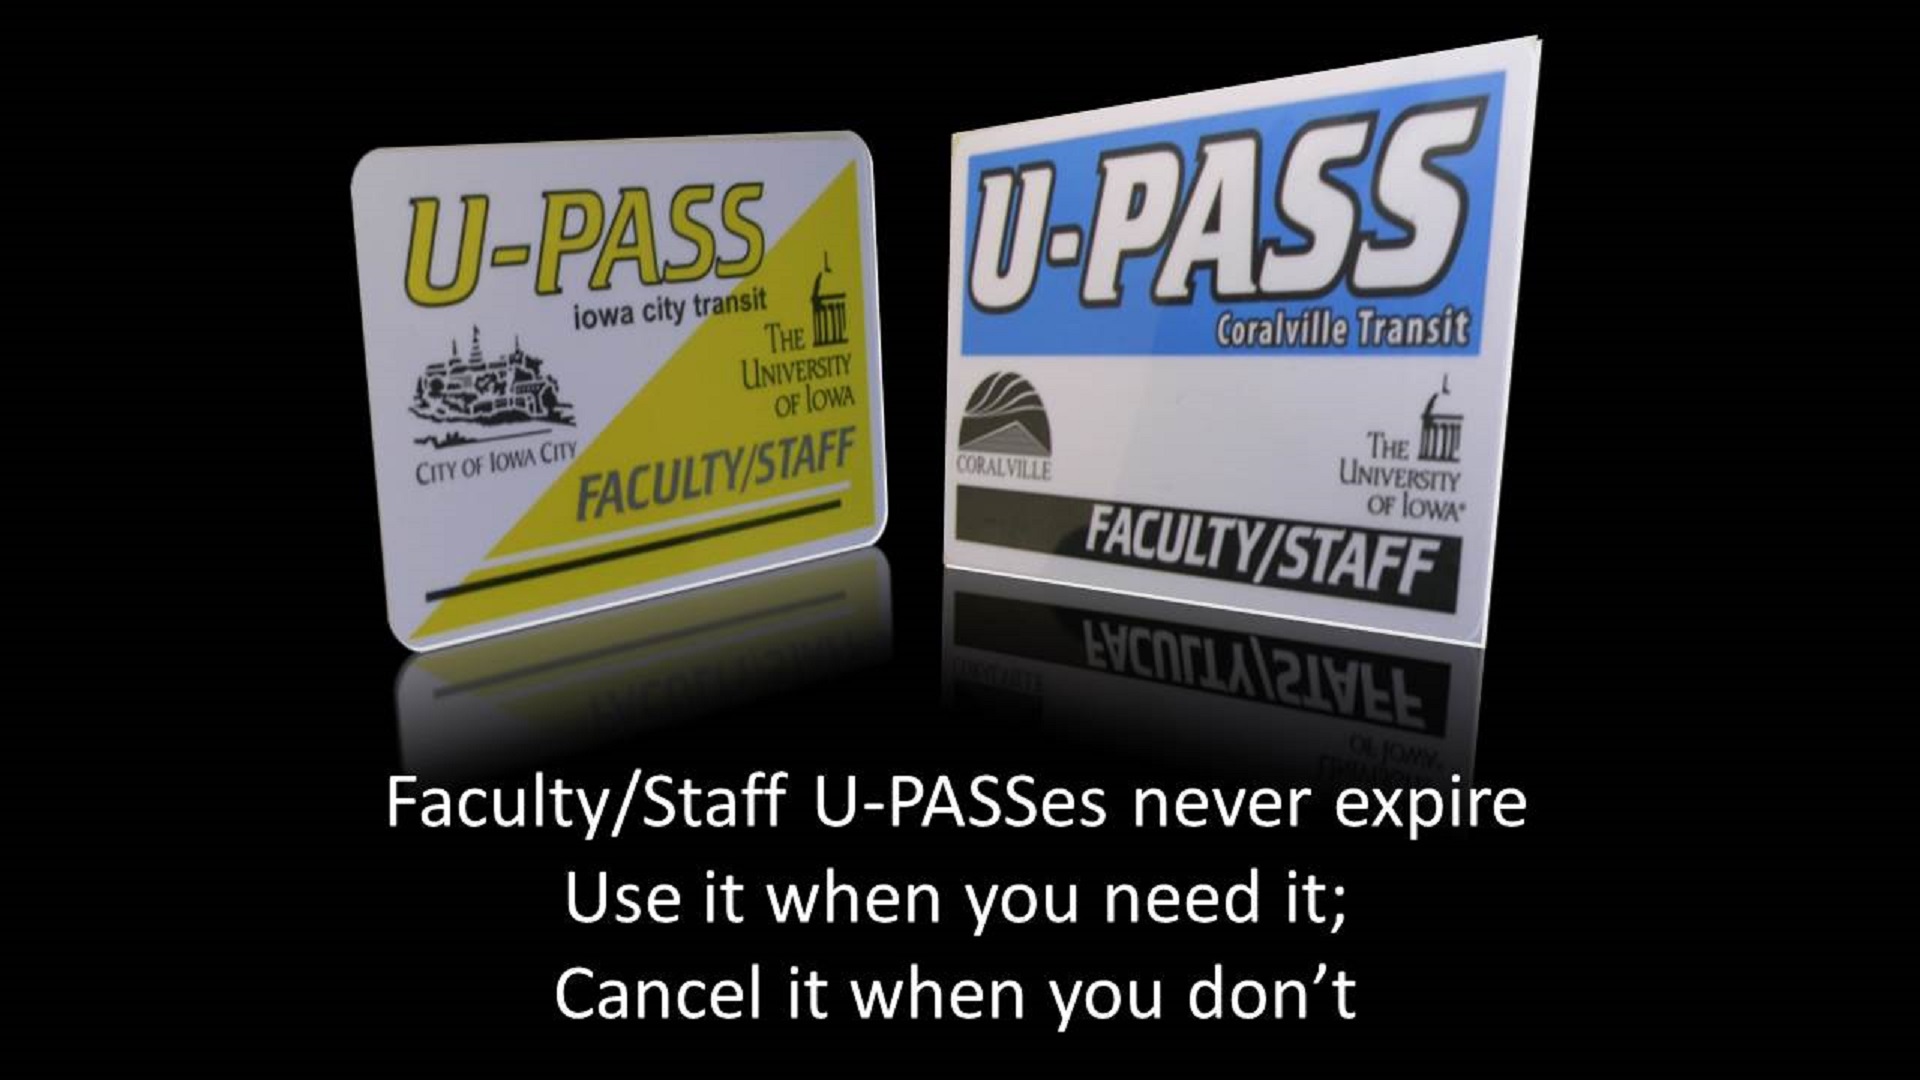 Employee U-passes never expire